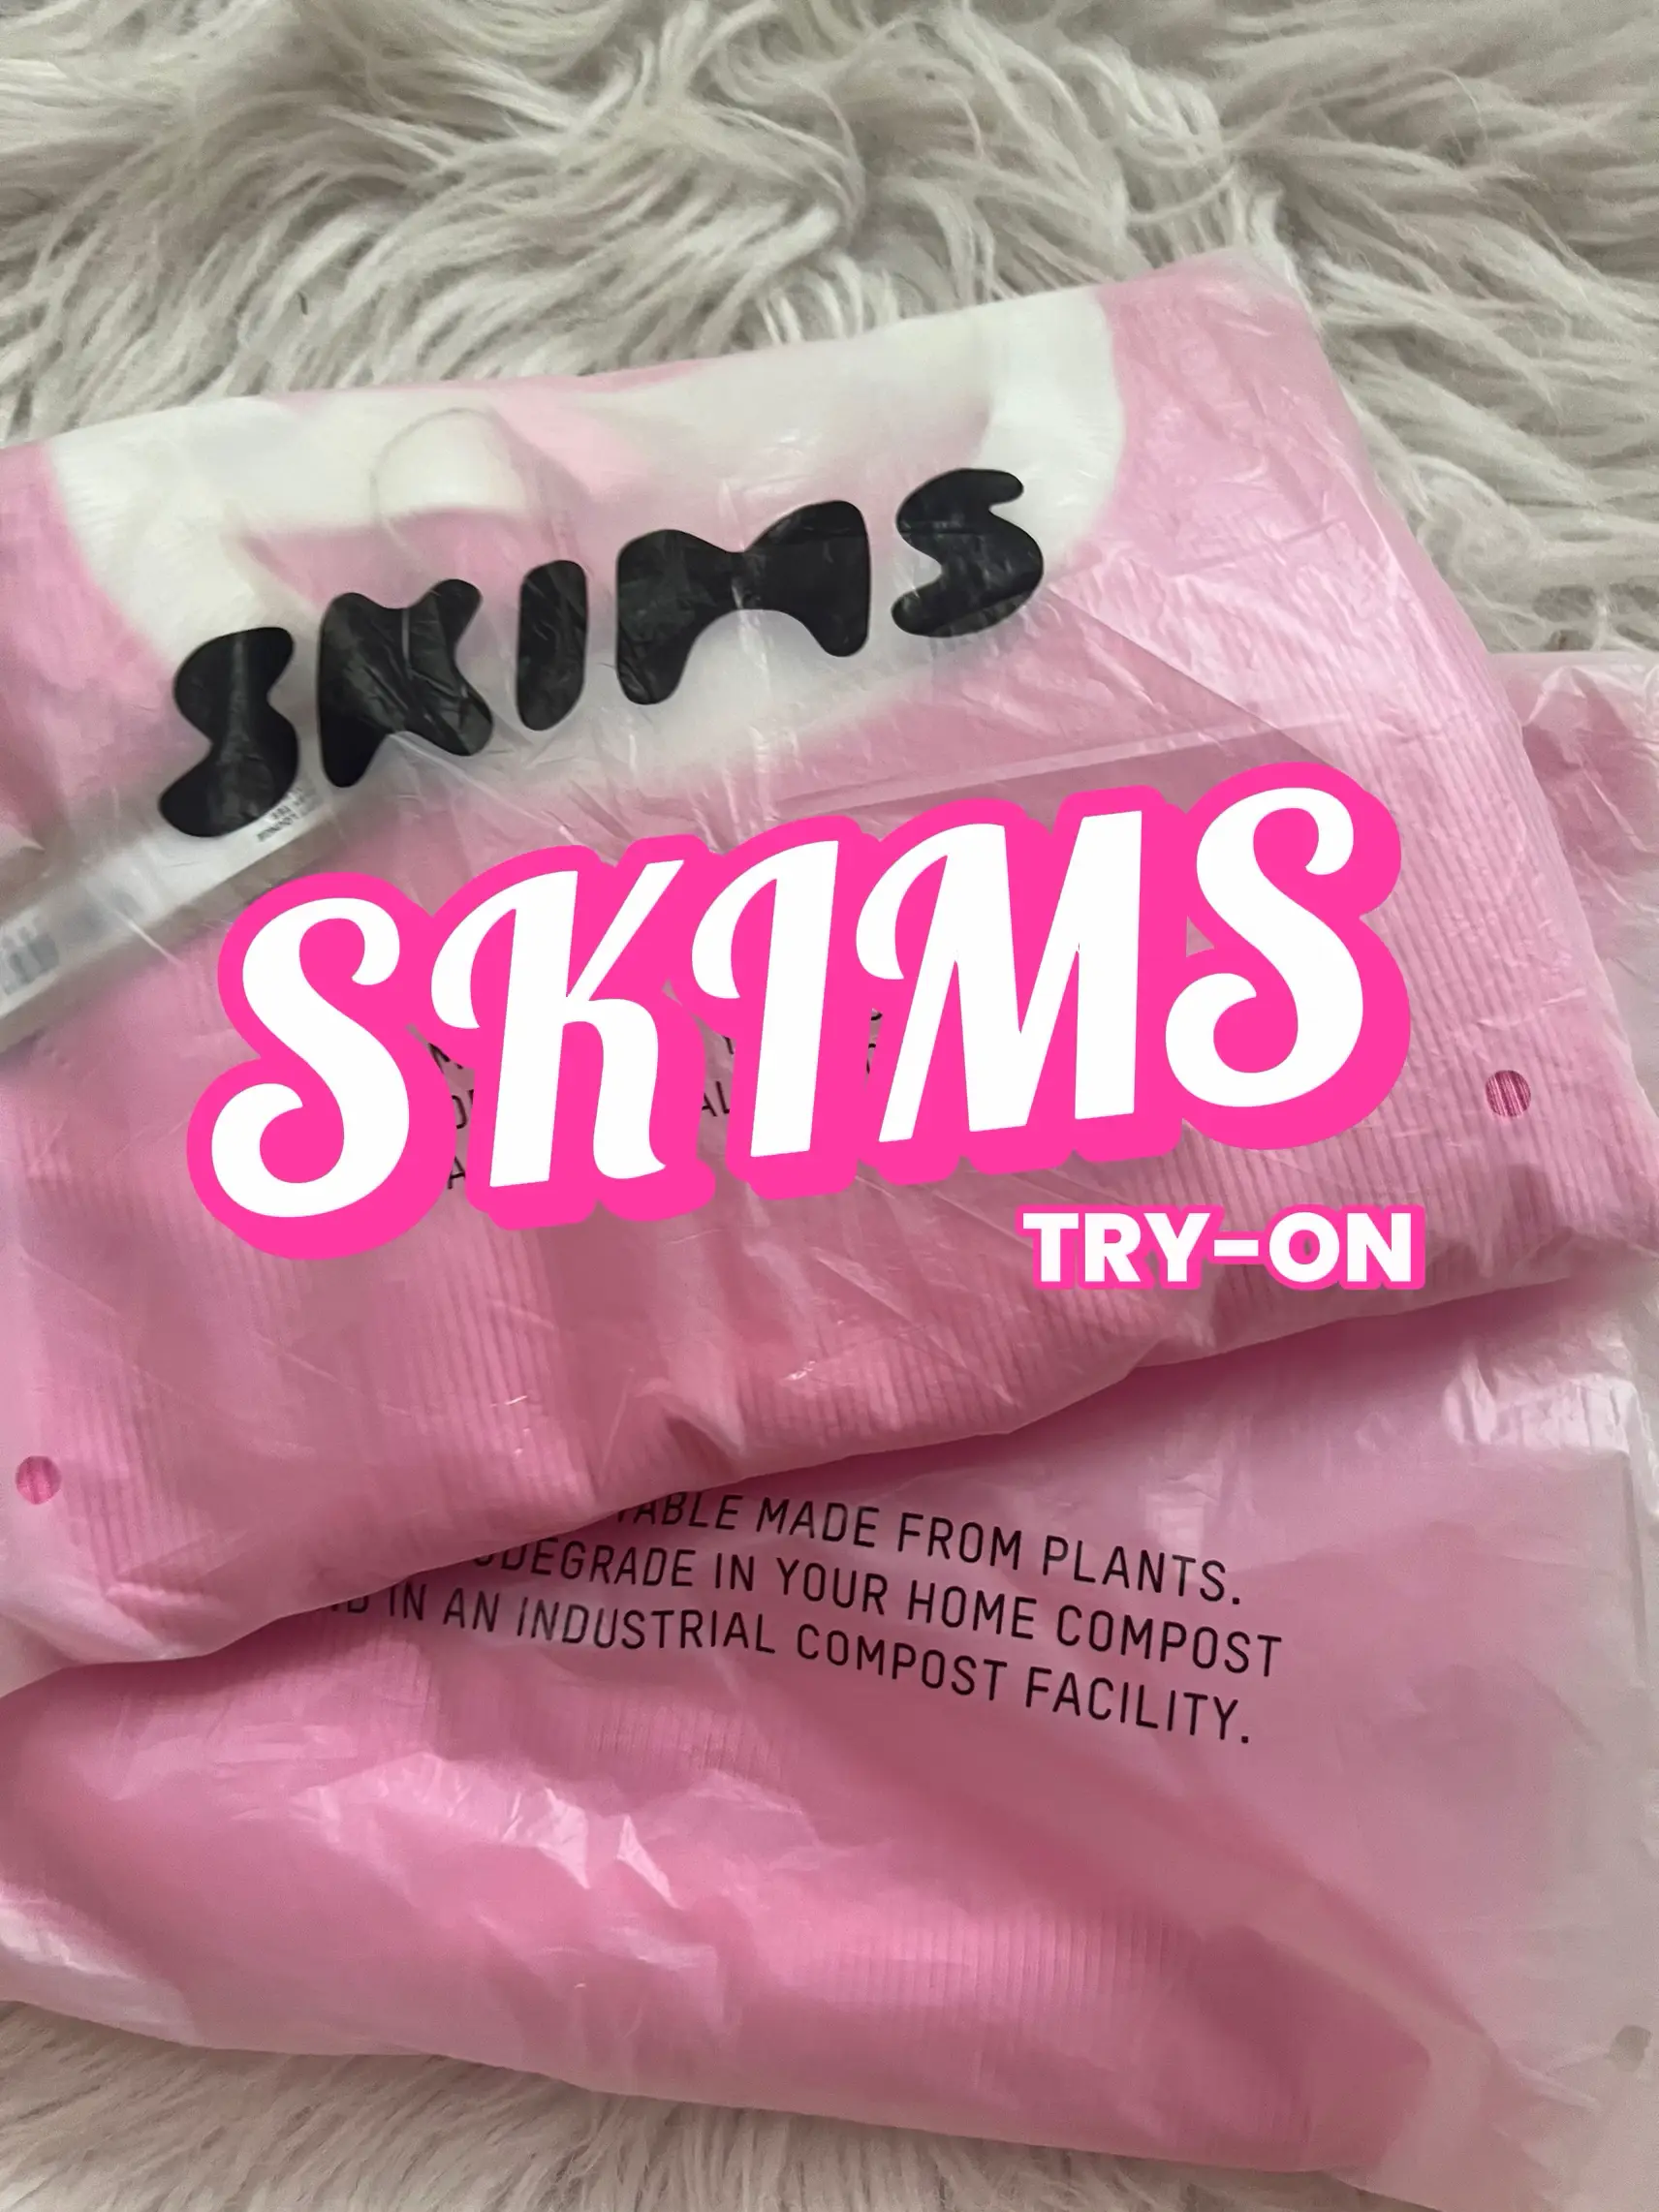 New Skims Launch - Lemon8 Search